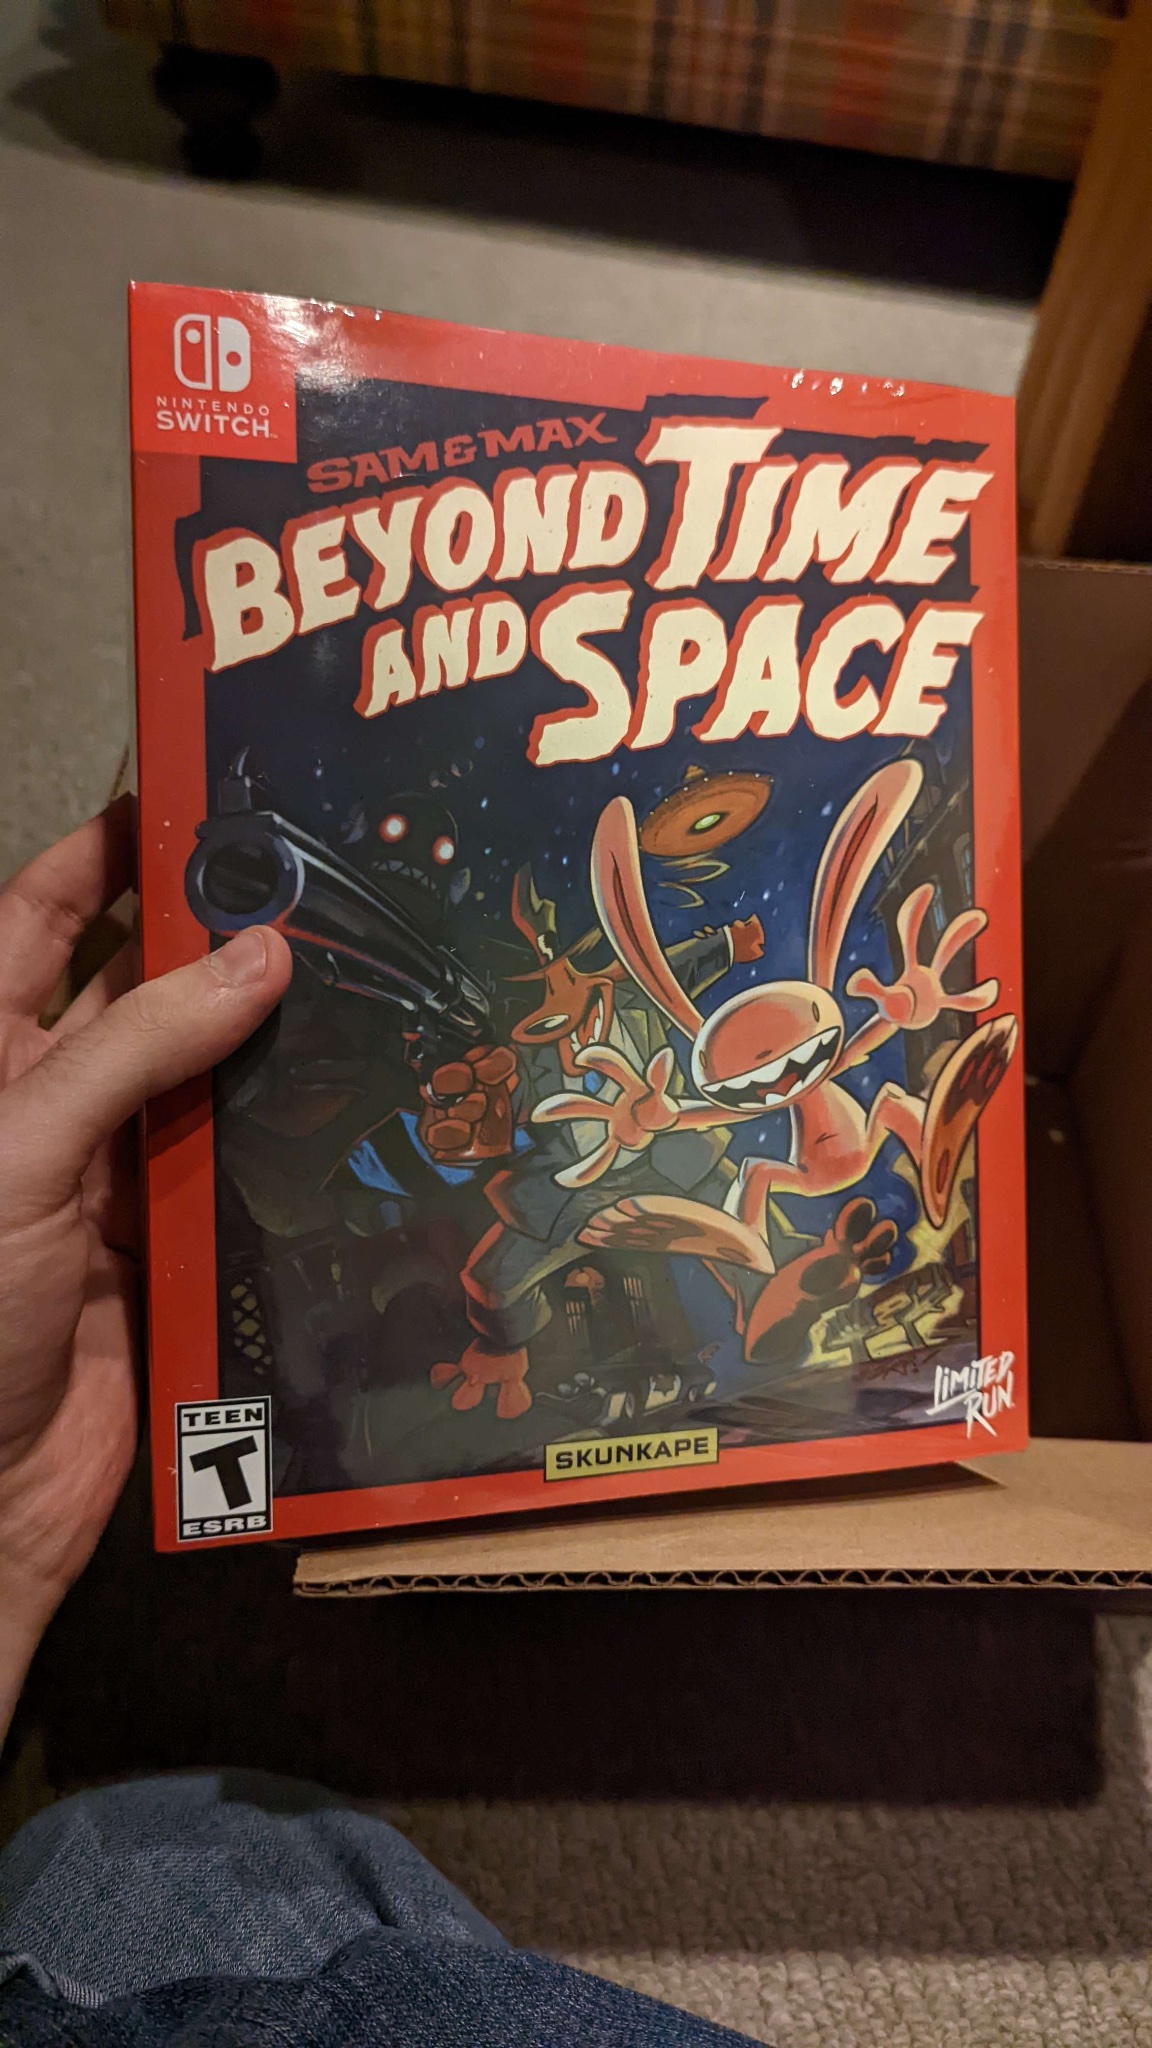 Análise: Sam & Max: Beyond Time and Space (Switch) é um clássico